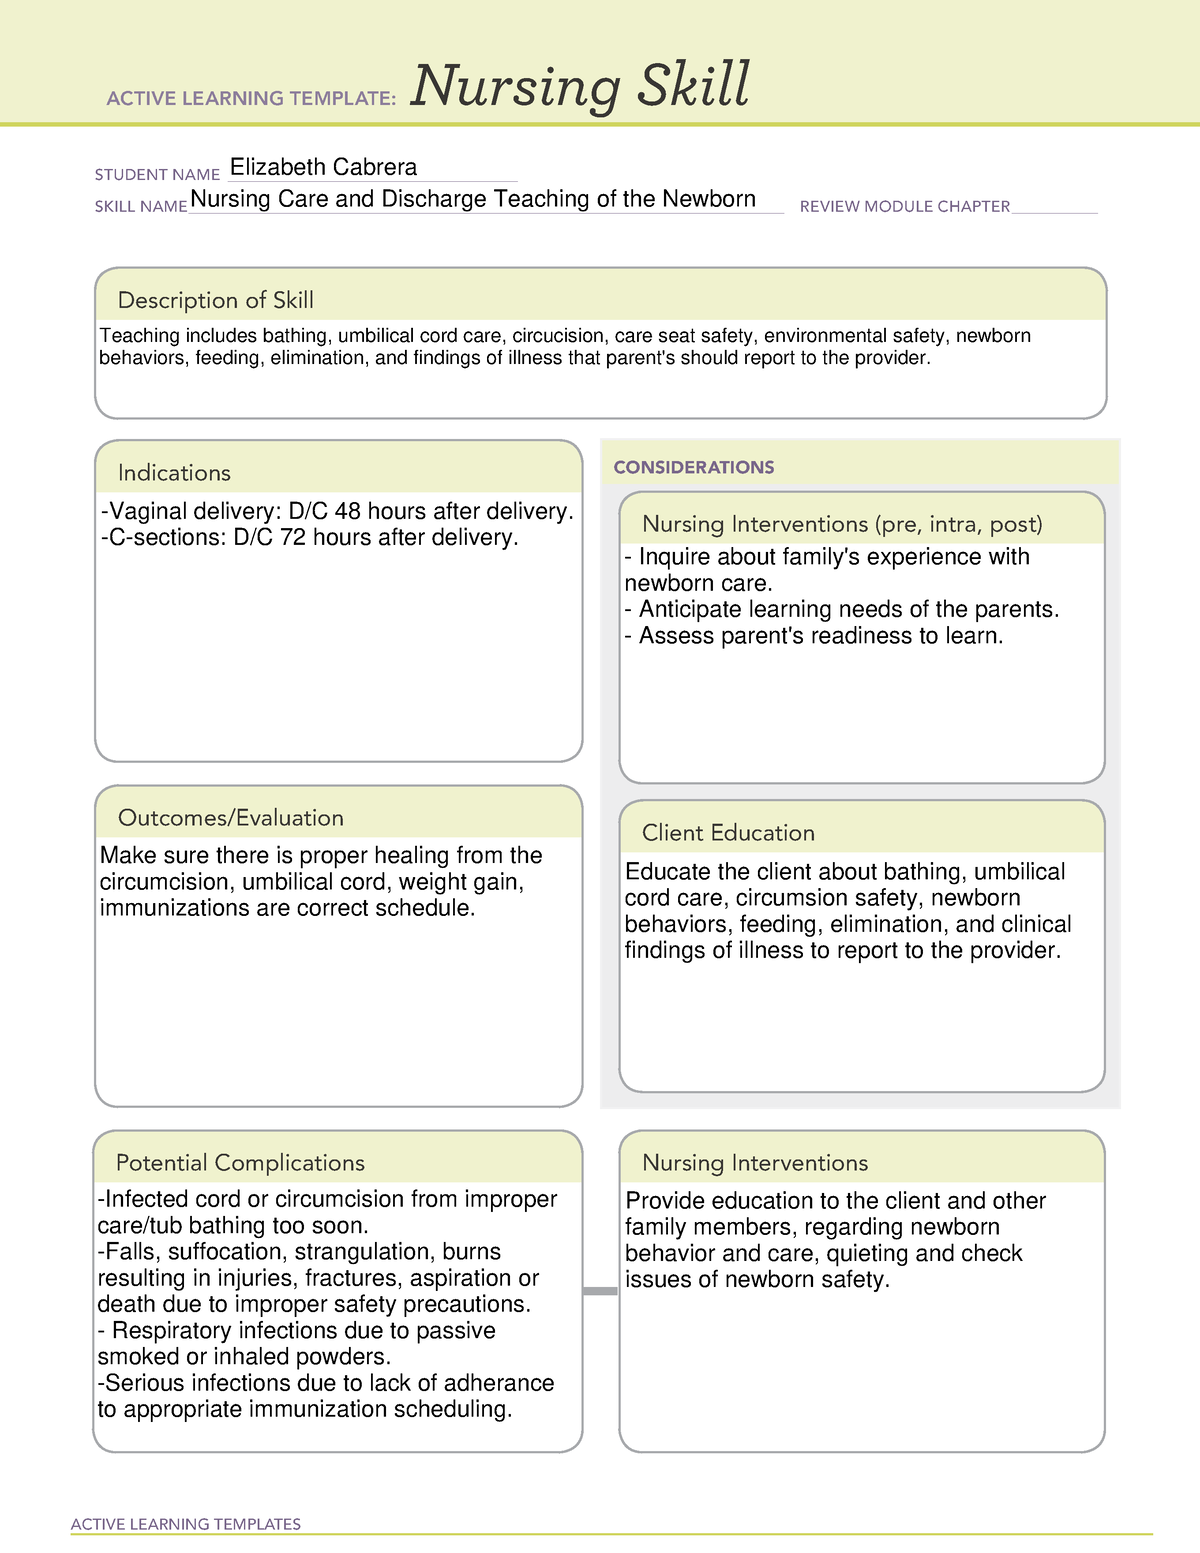 Discharge ATI Maternal Newborn Skill Sheet ACTIVE LEARNING TEMPLATES Nursing Skill STUDENT